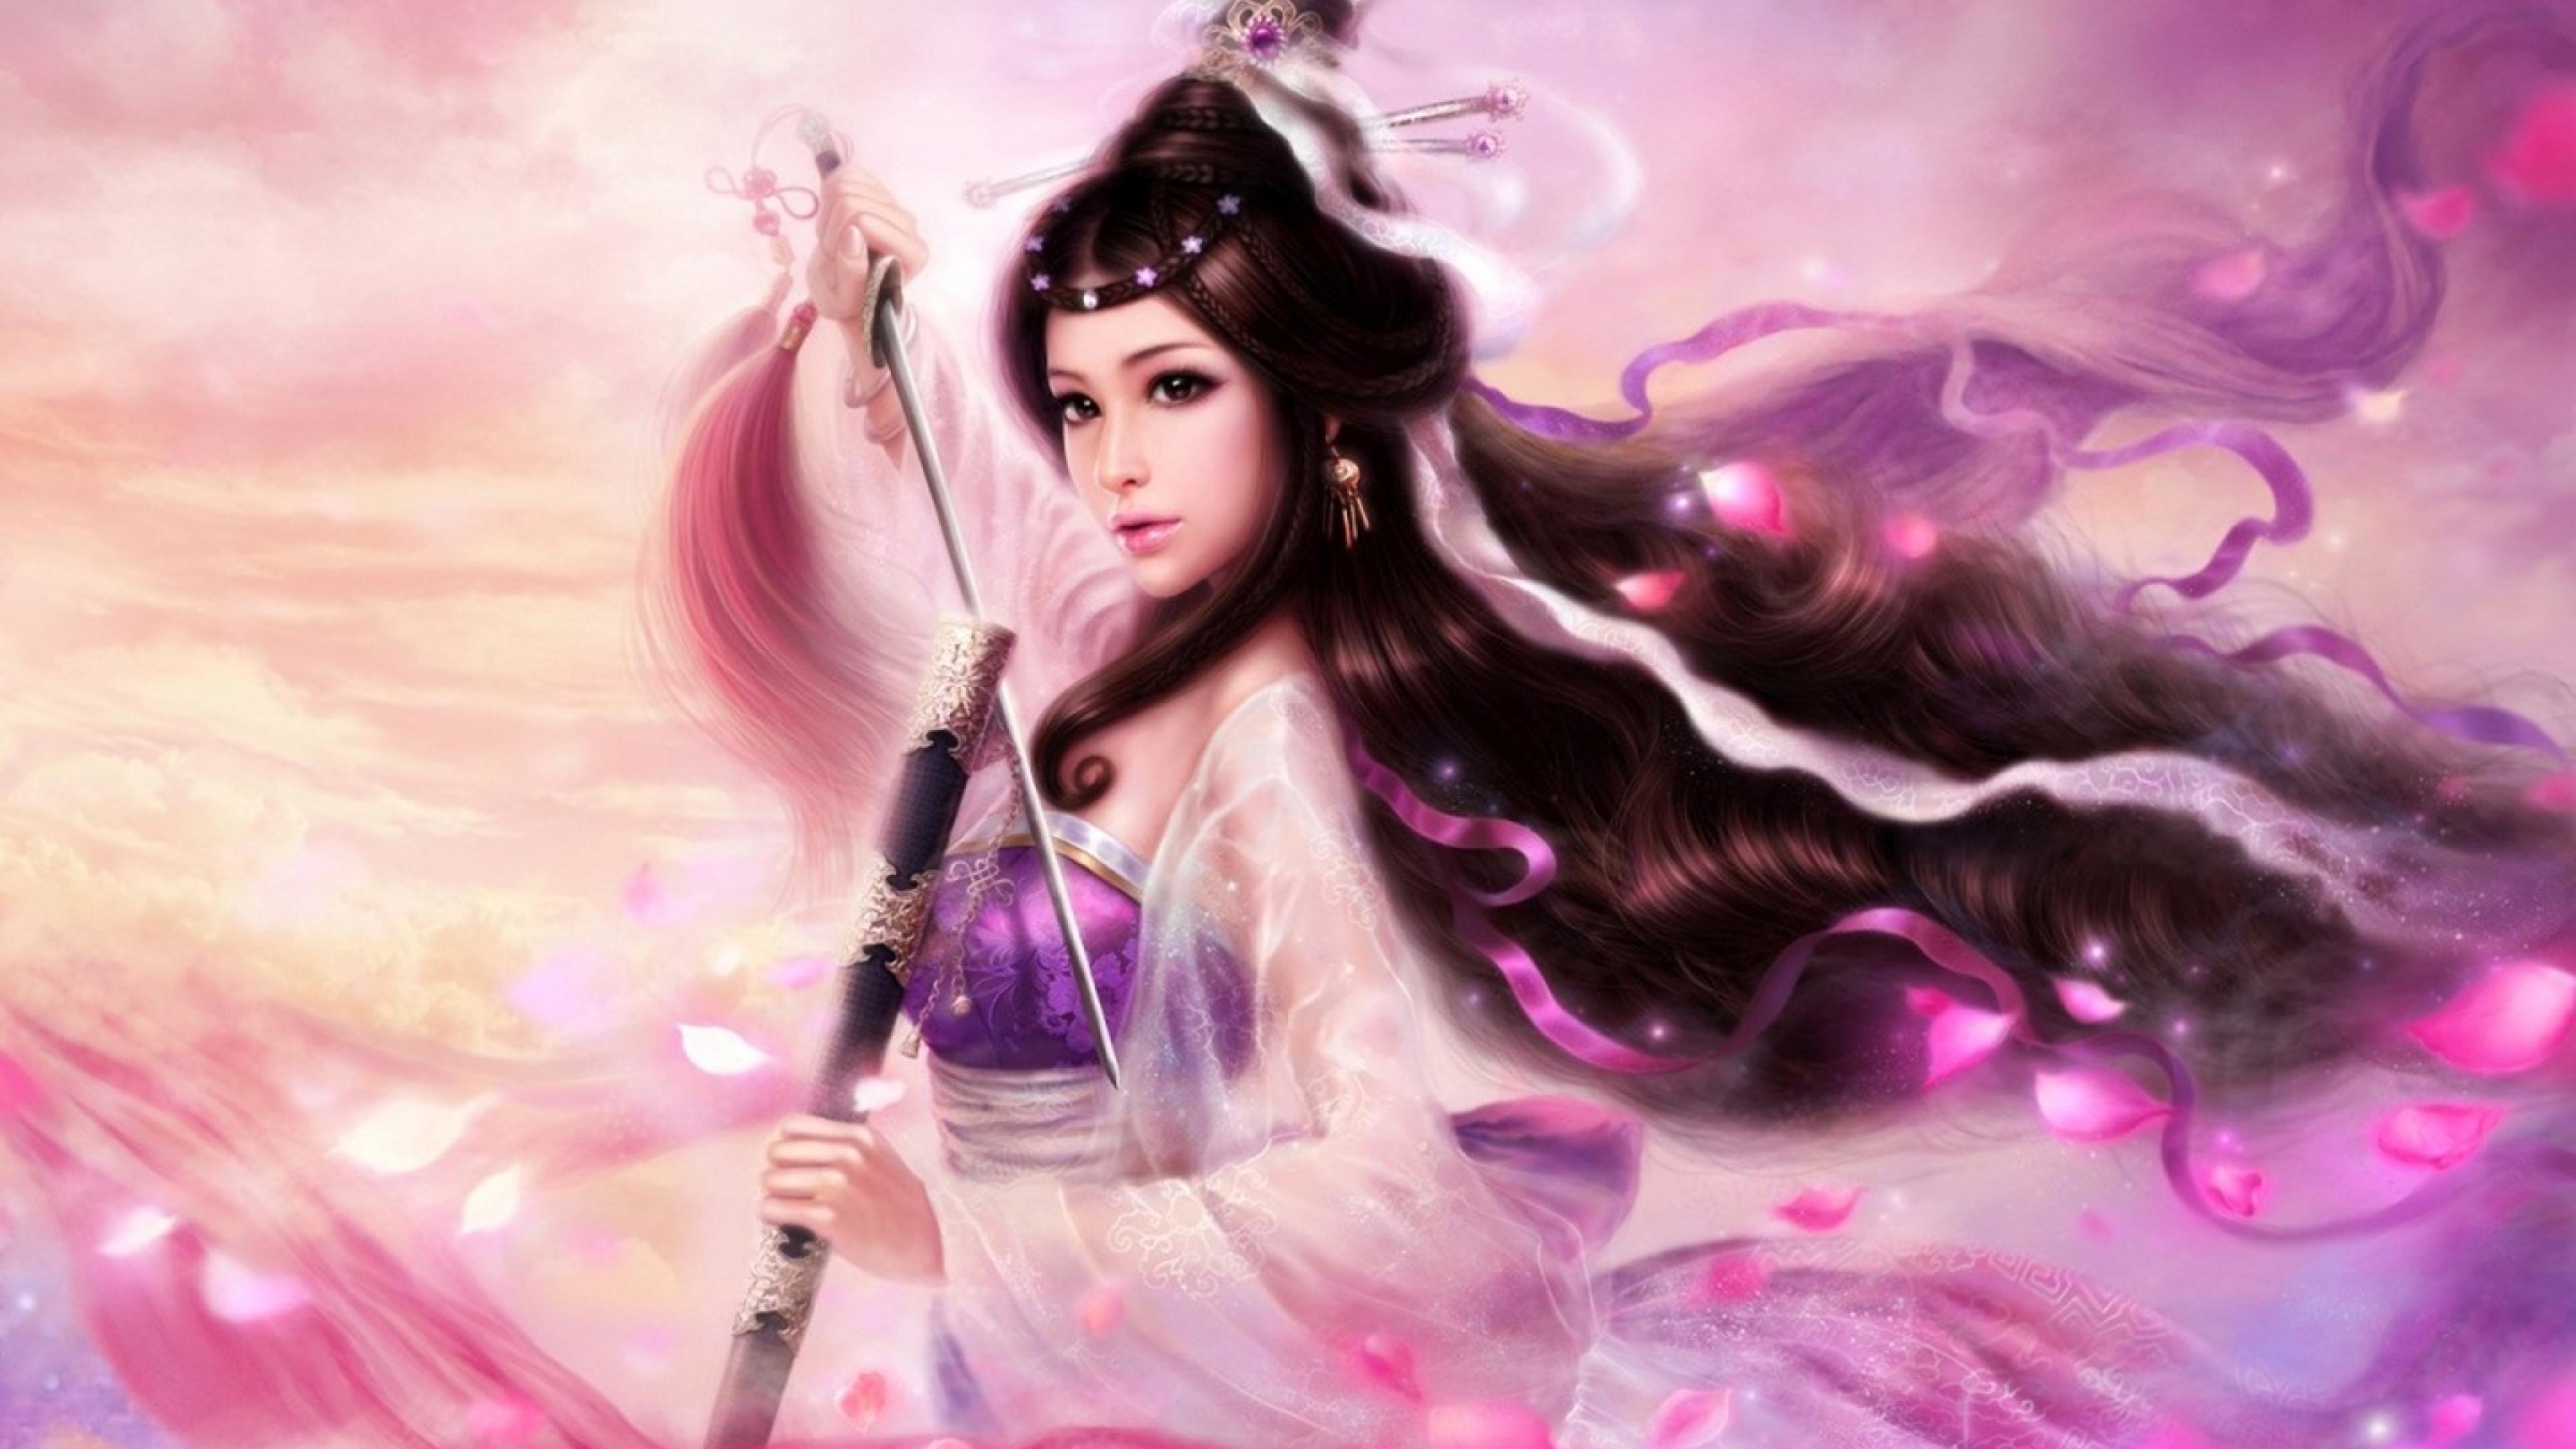 Samurai Princess Sword Purple Fantasy Girl Ultra 3840x2160 HD Wallpaper 1564910, Wallpaper13.com